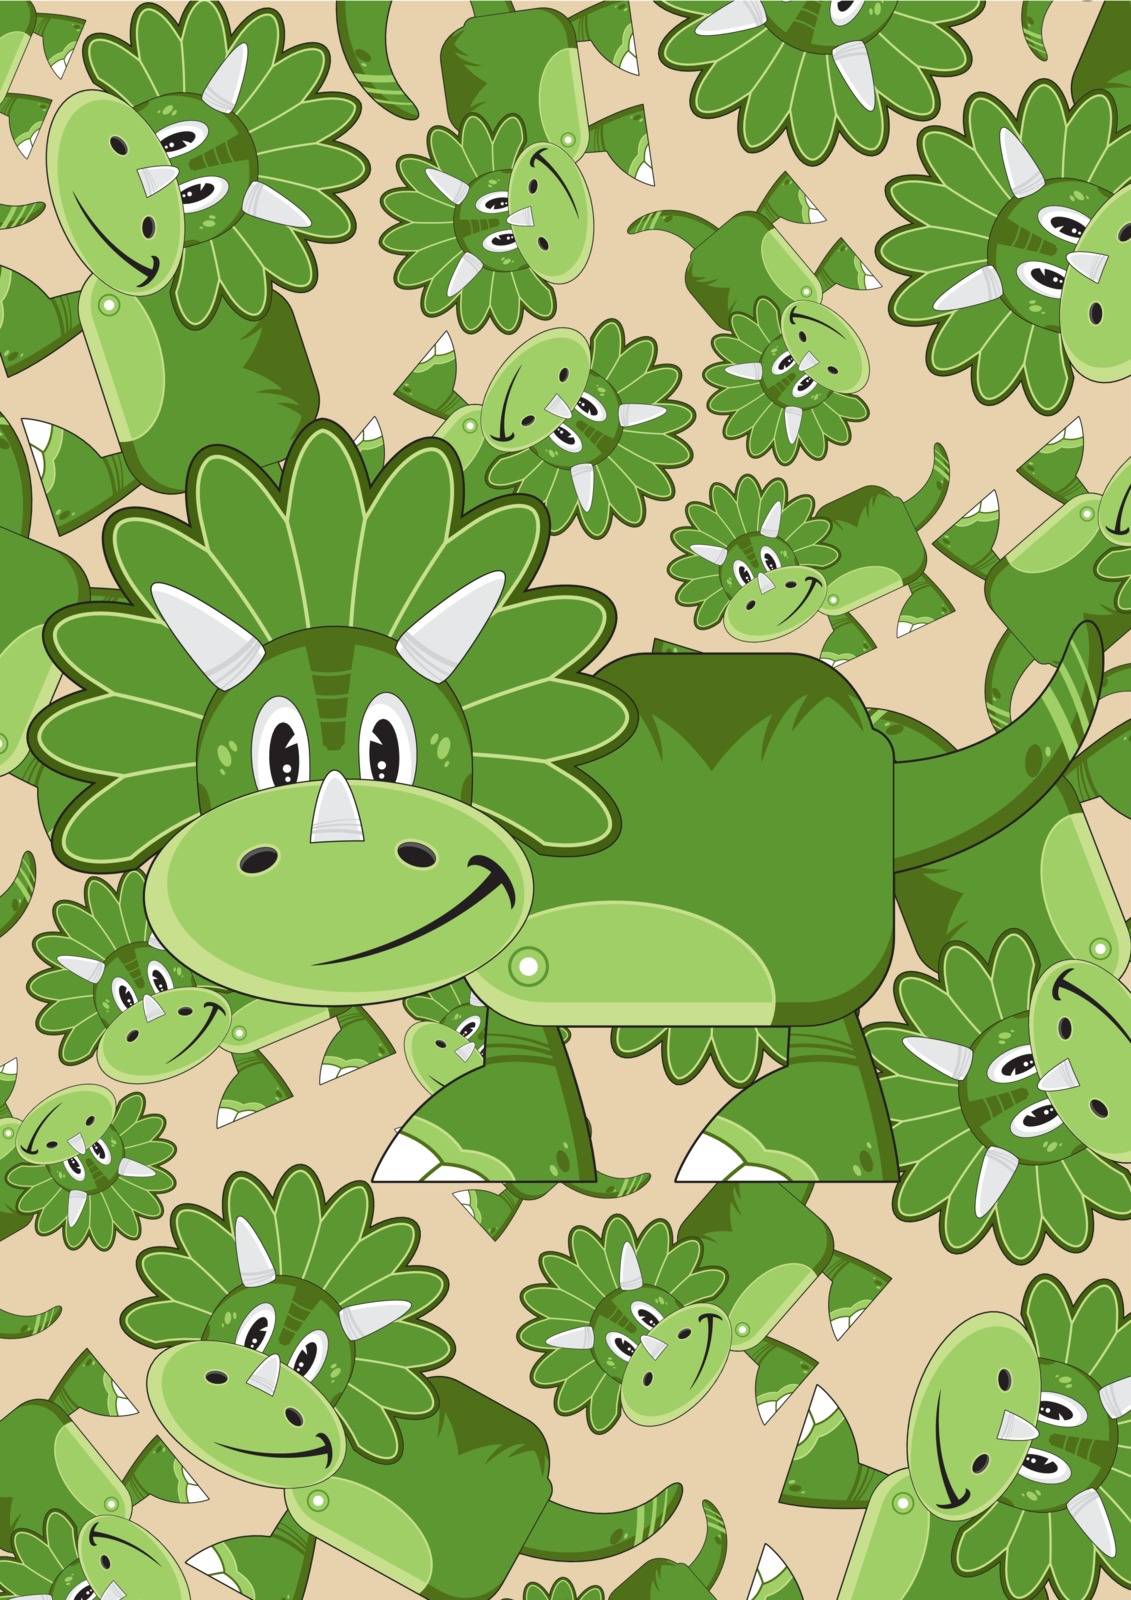 Cute Cartoon Triceratops Dinosaur by markmurphycreative